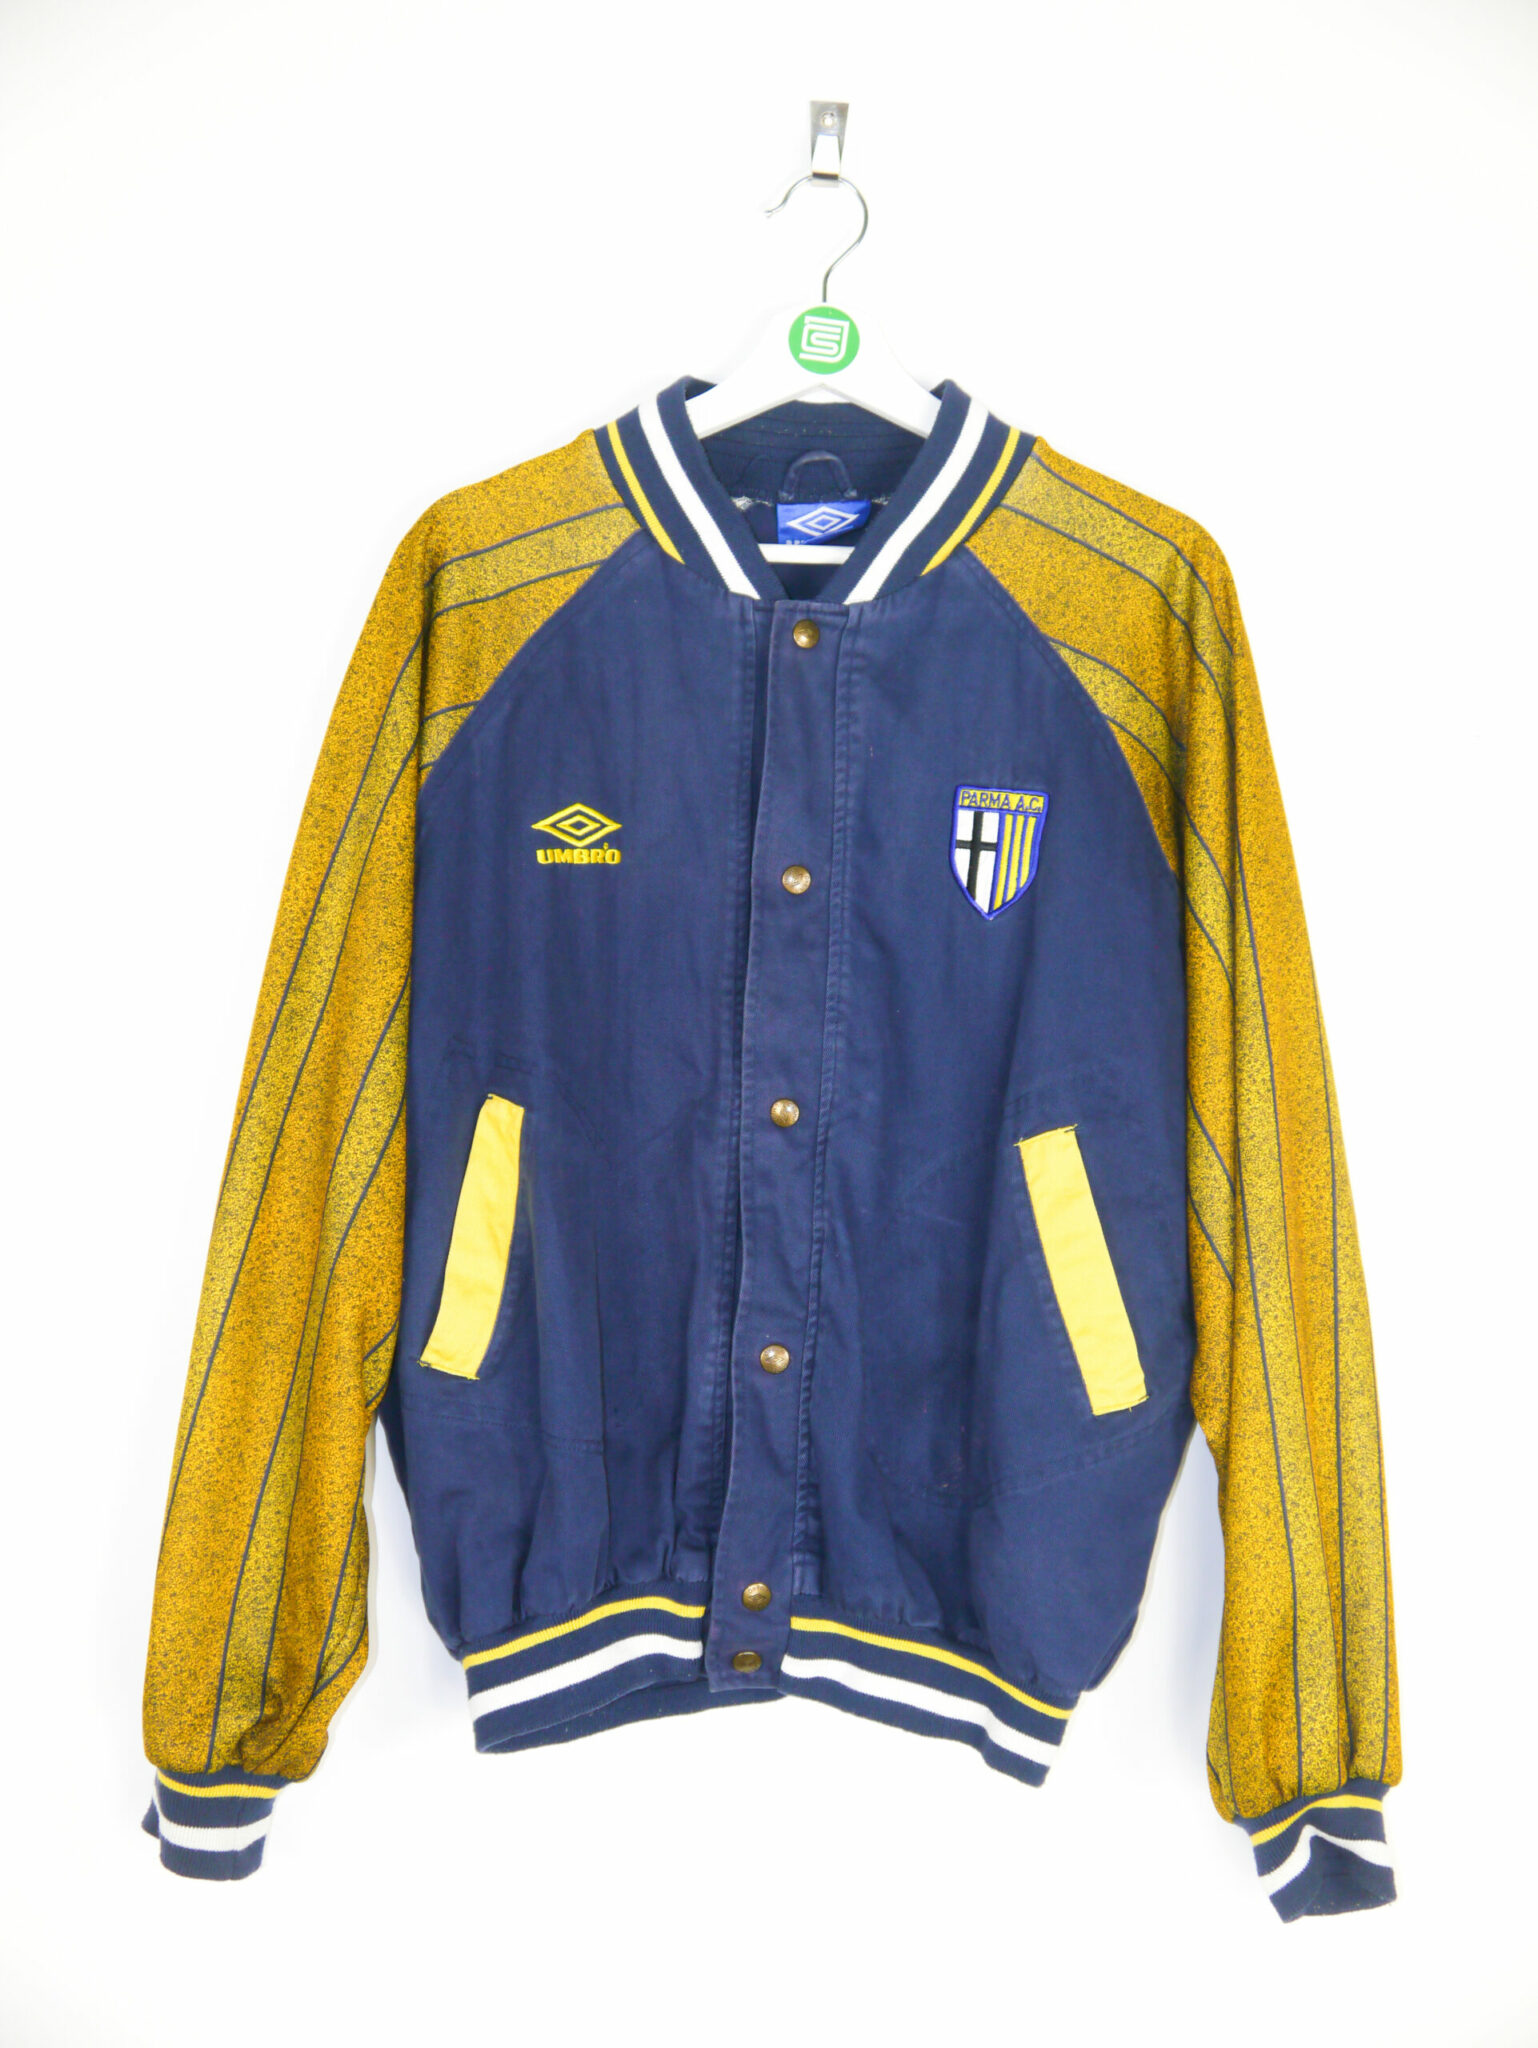 1993-95 Parma jacket - M • RB - Classic Soccer Jerseys